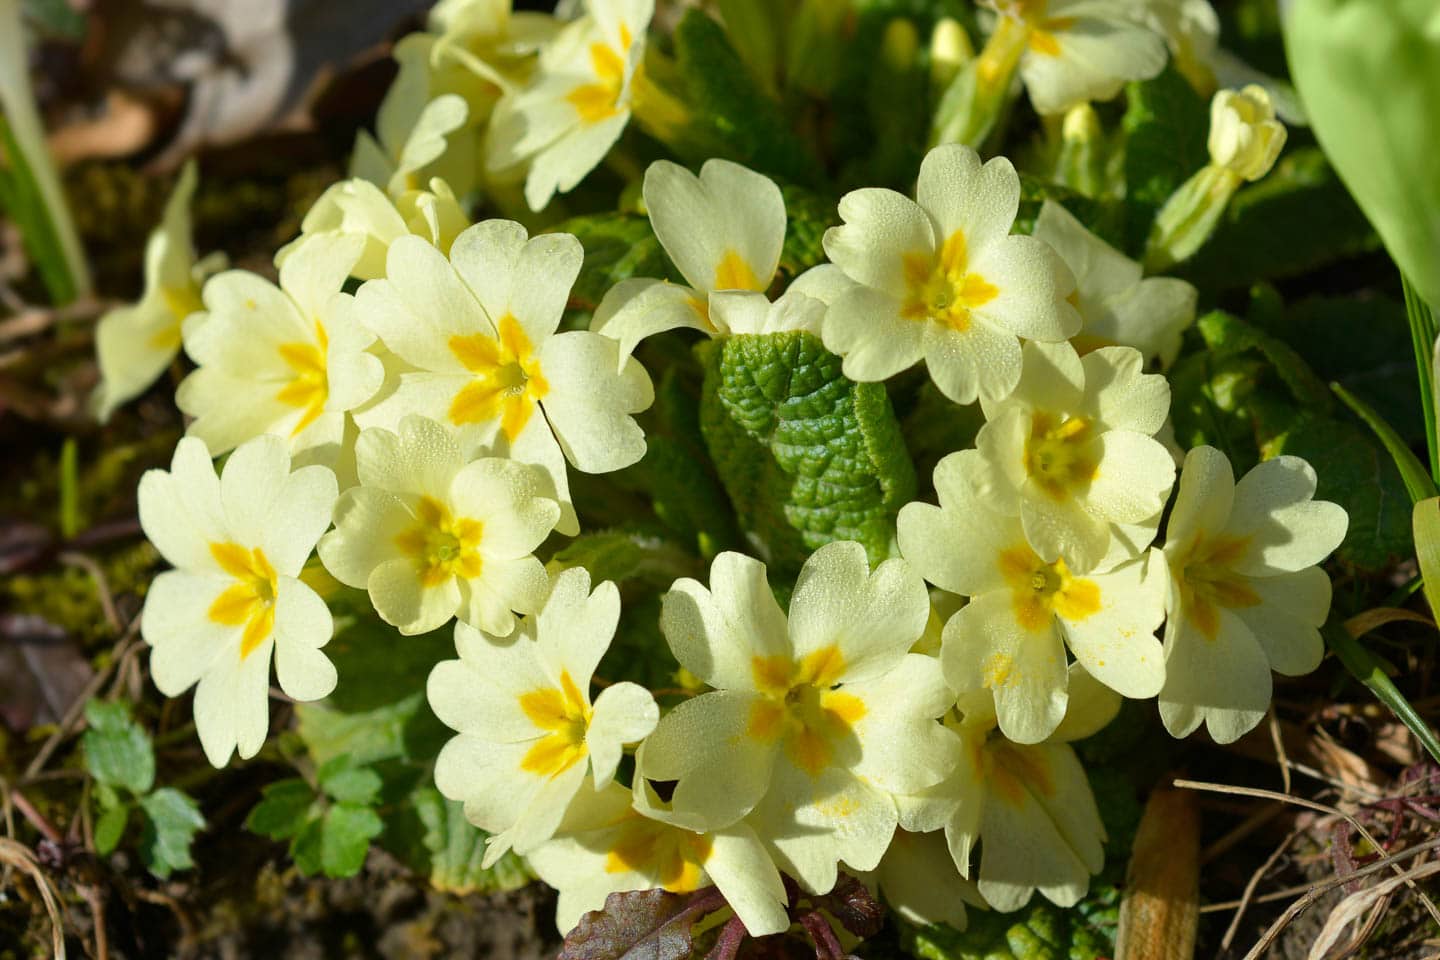 Yellow English or common primrose flowers